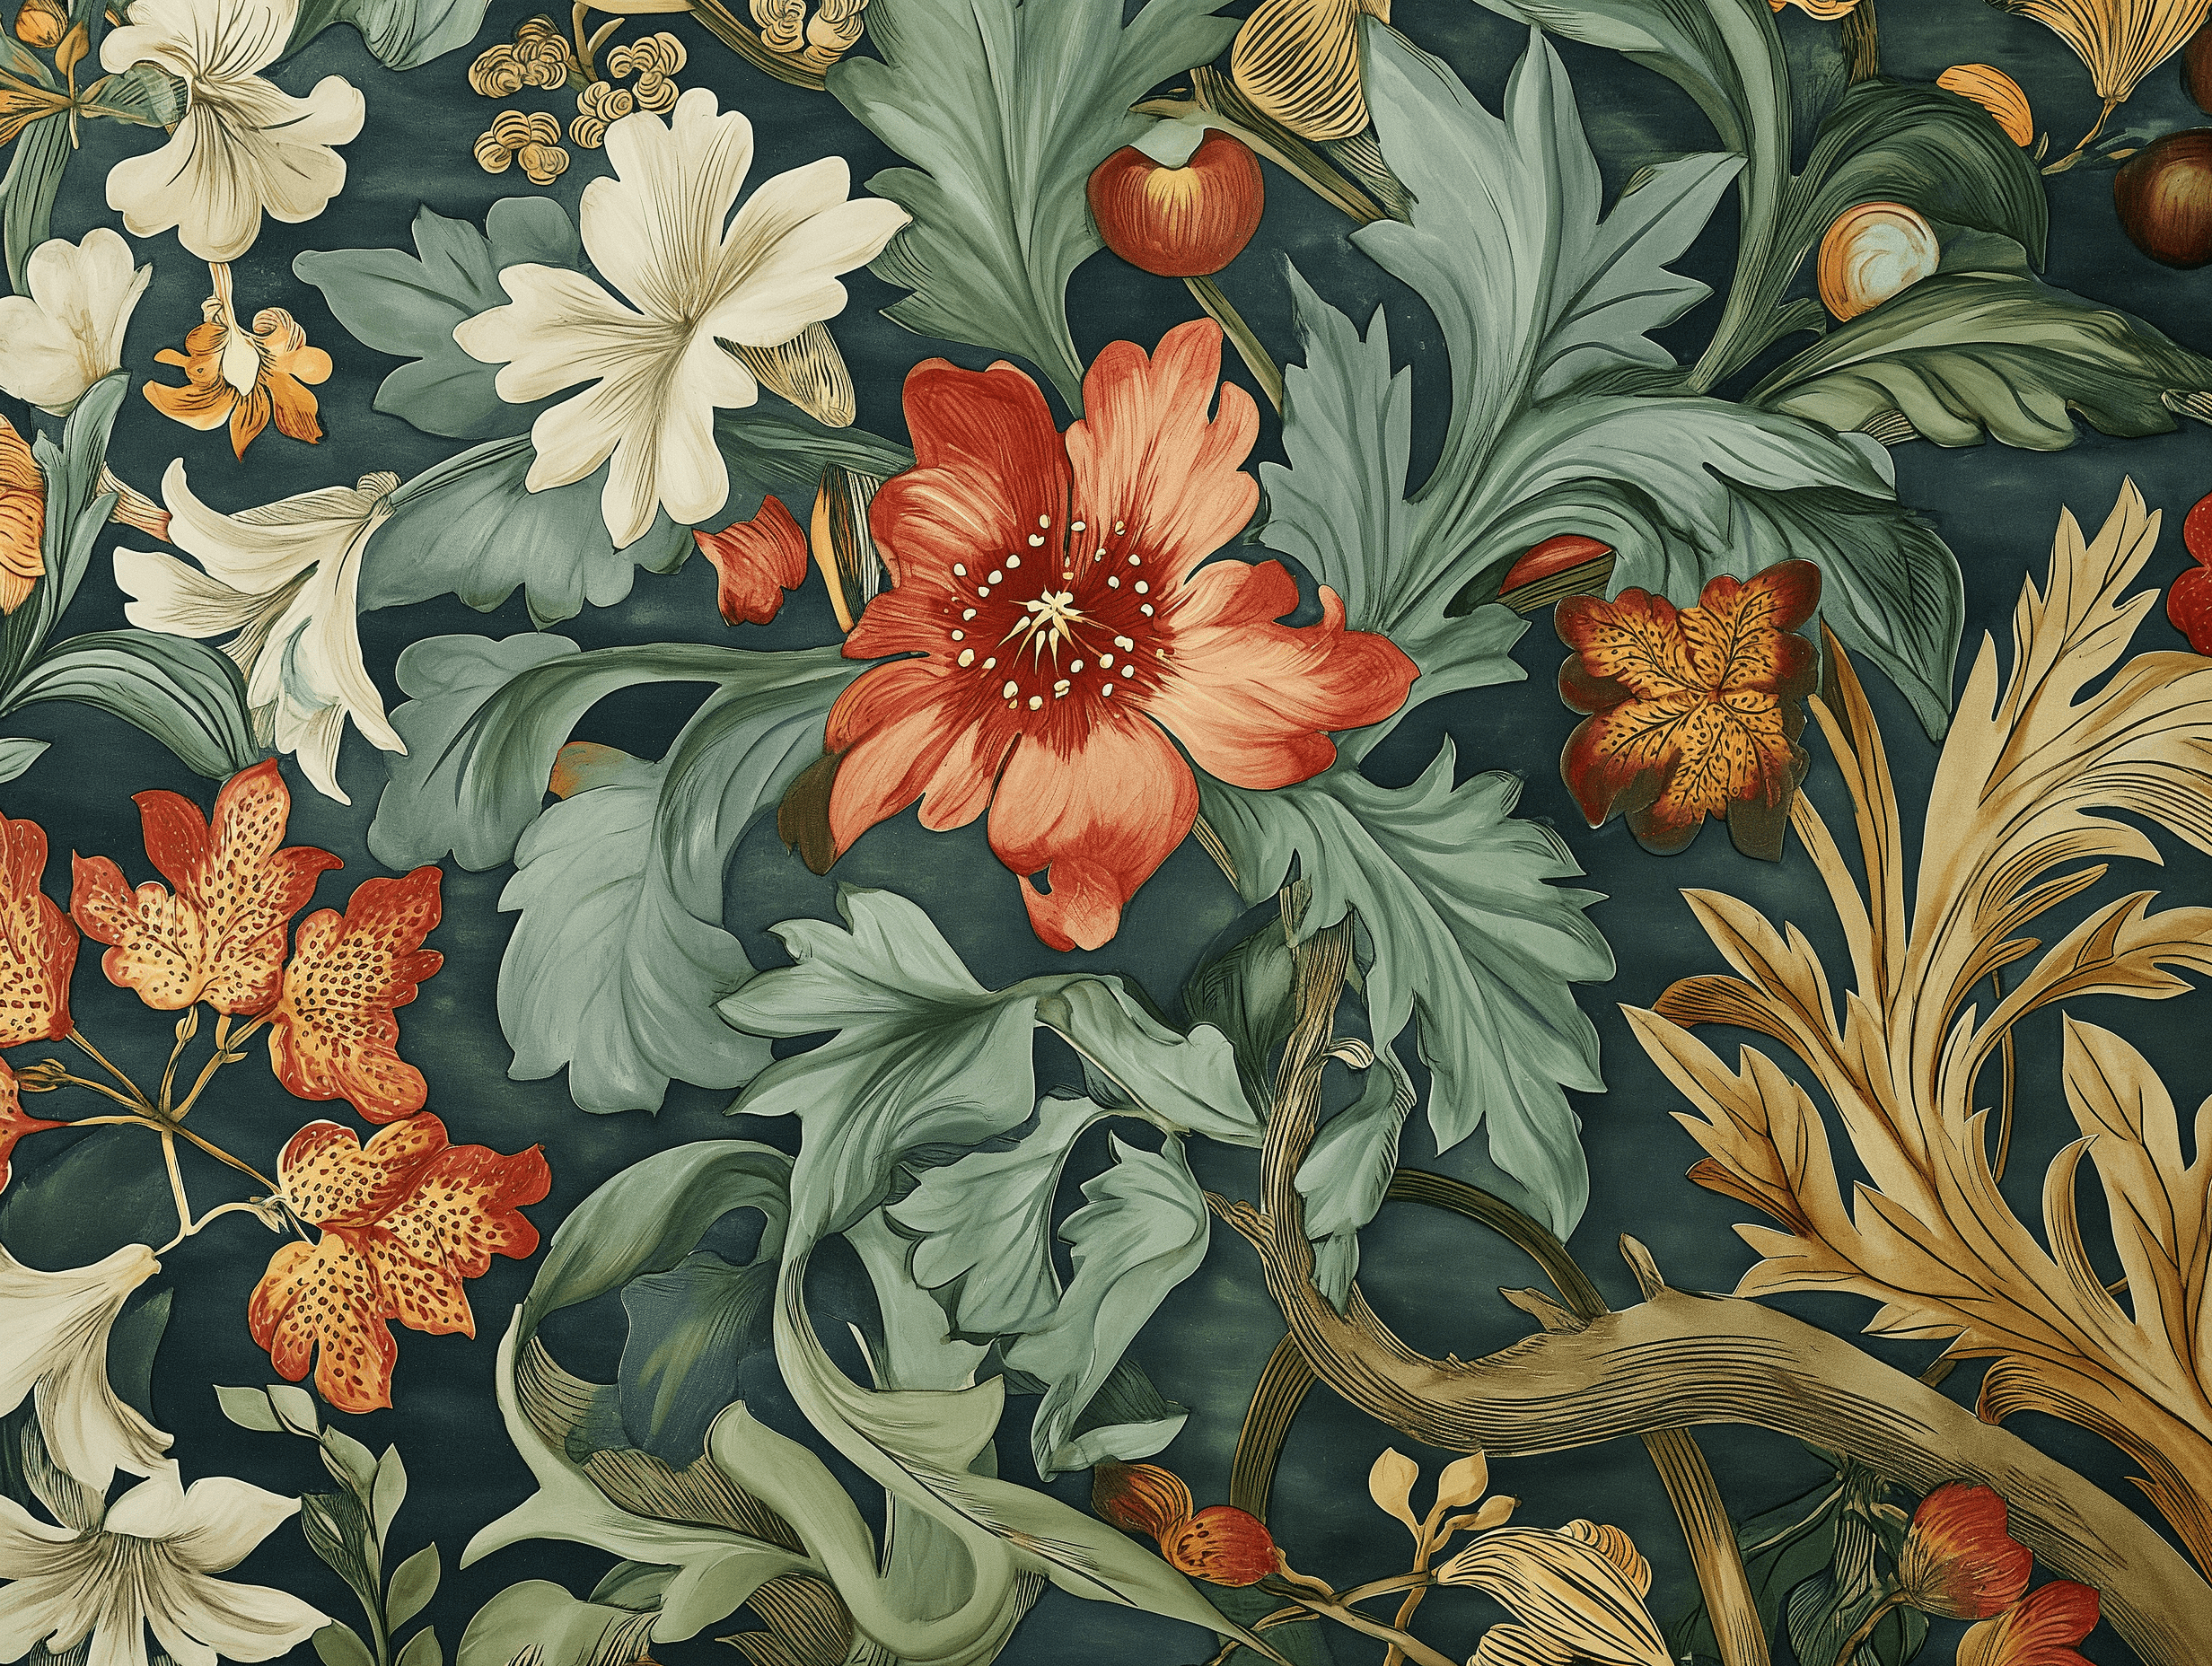 Wallpaper design by William Morris depicting floral and vine patterns